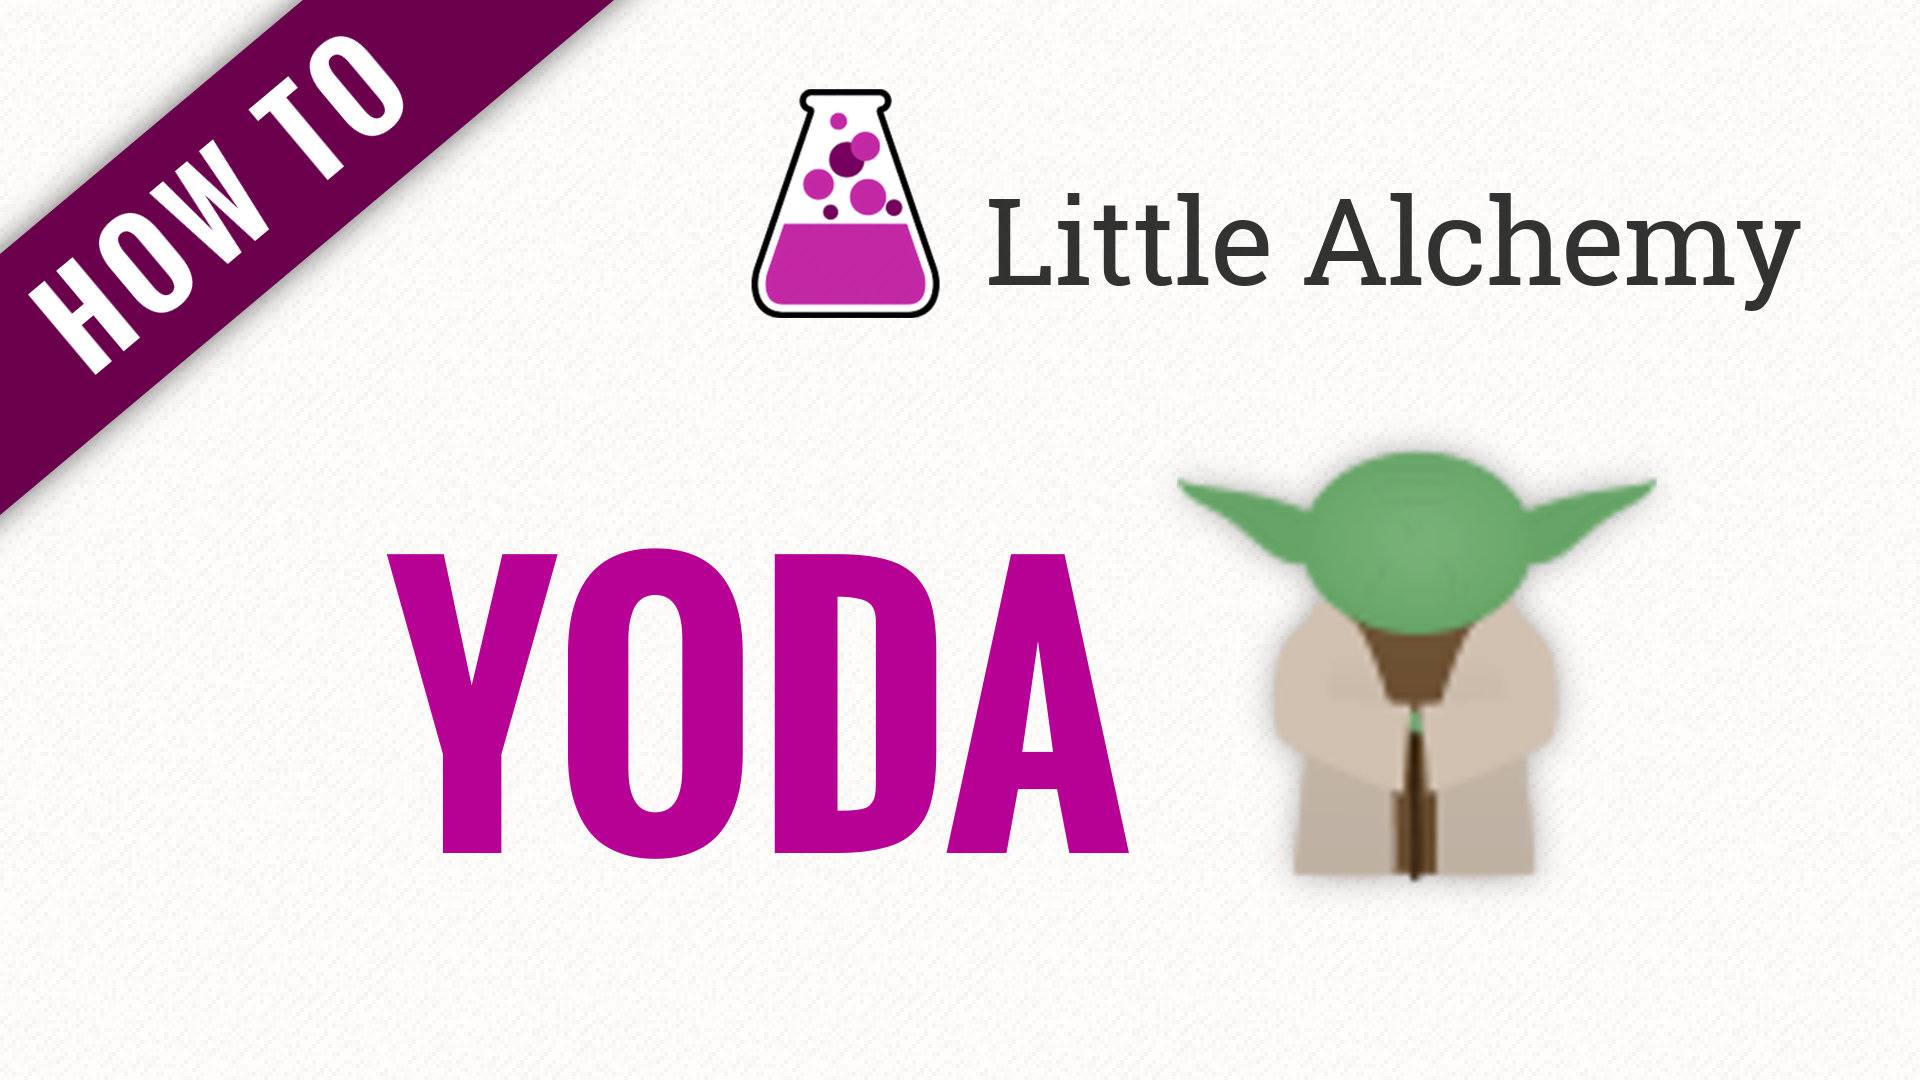 How To Make Baby Yoda In Little Alchemy 2